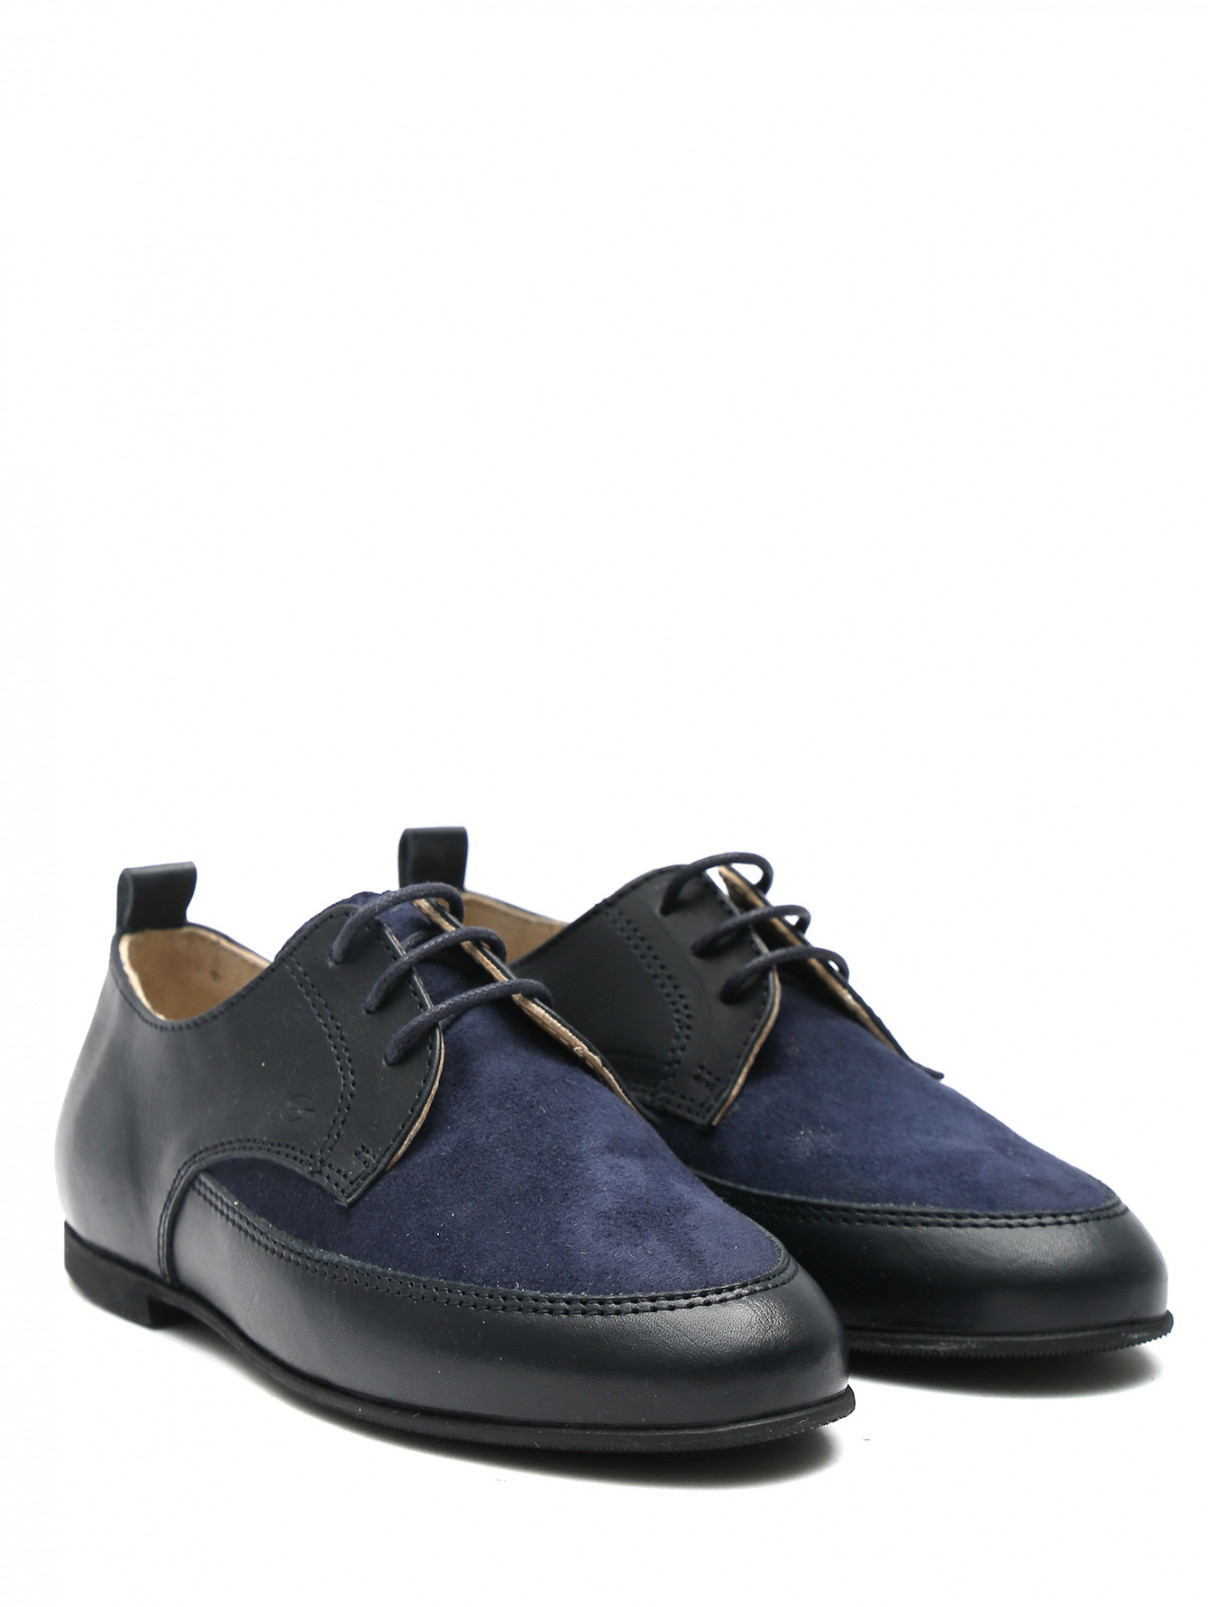 Туфли из кожи на шнурках Gallucci  –  Общий вид  – Цвет:  Синий